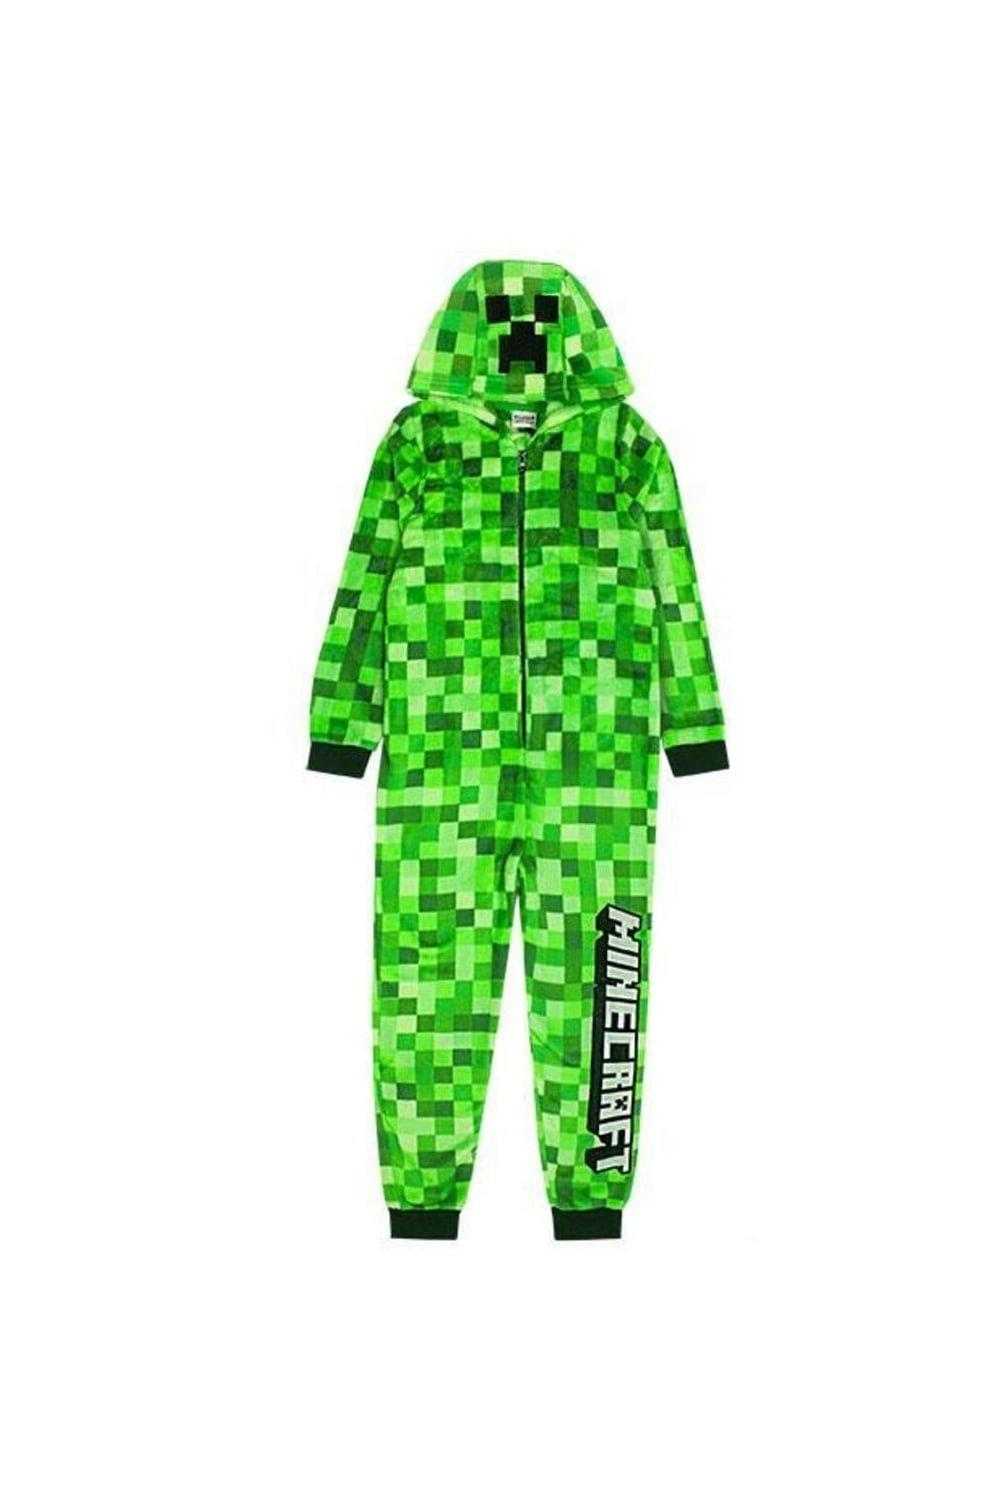 Creeper Pixel Bodysuit